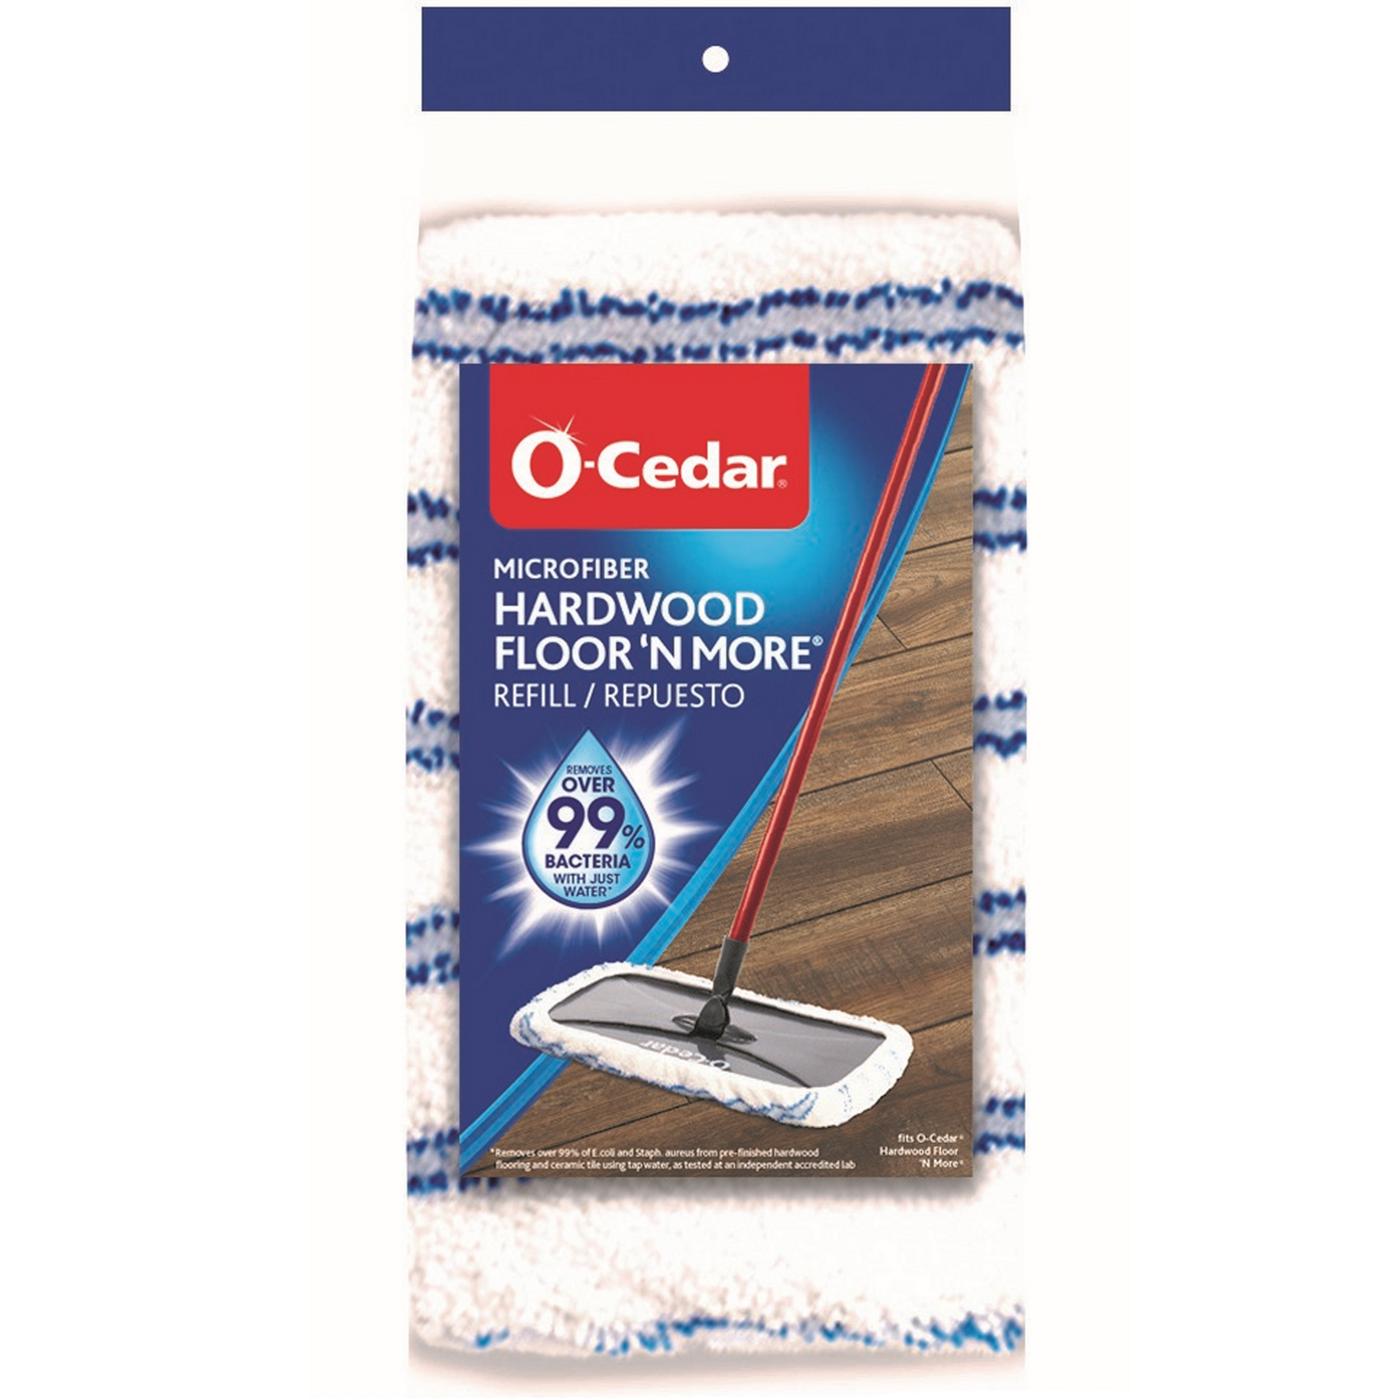 O-Cedar Hardwood Floor ‘N More Microfiber Mop Refill; image 1 of 2